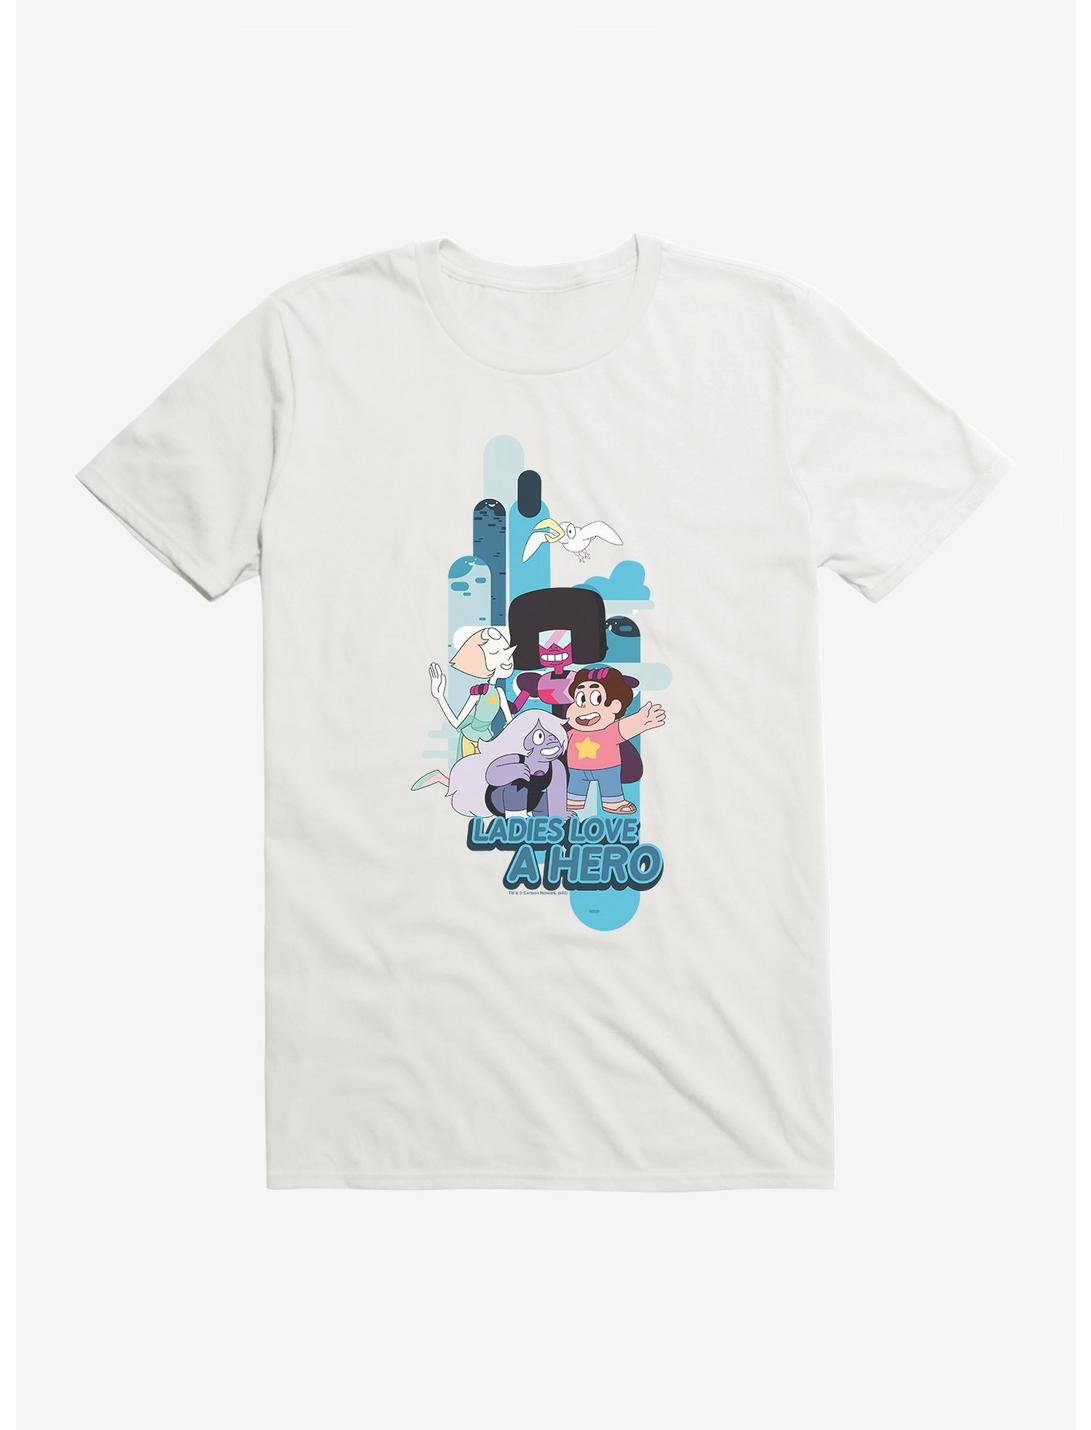 Steven Universe Ladies Love A Hero T-Shirt, , hi-res